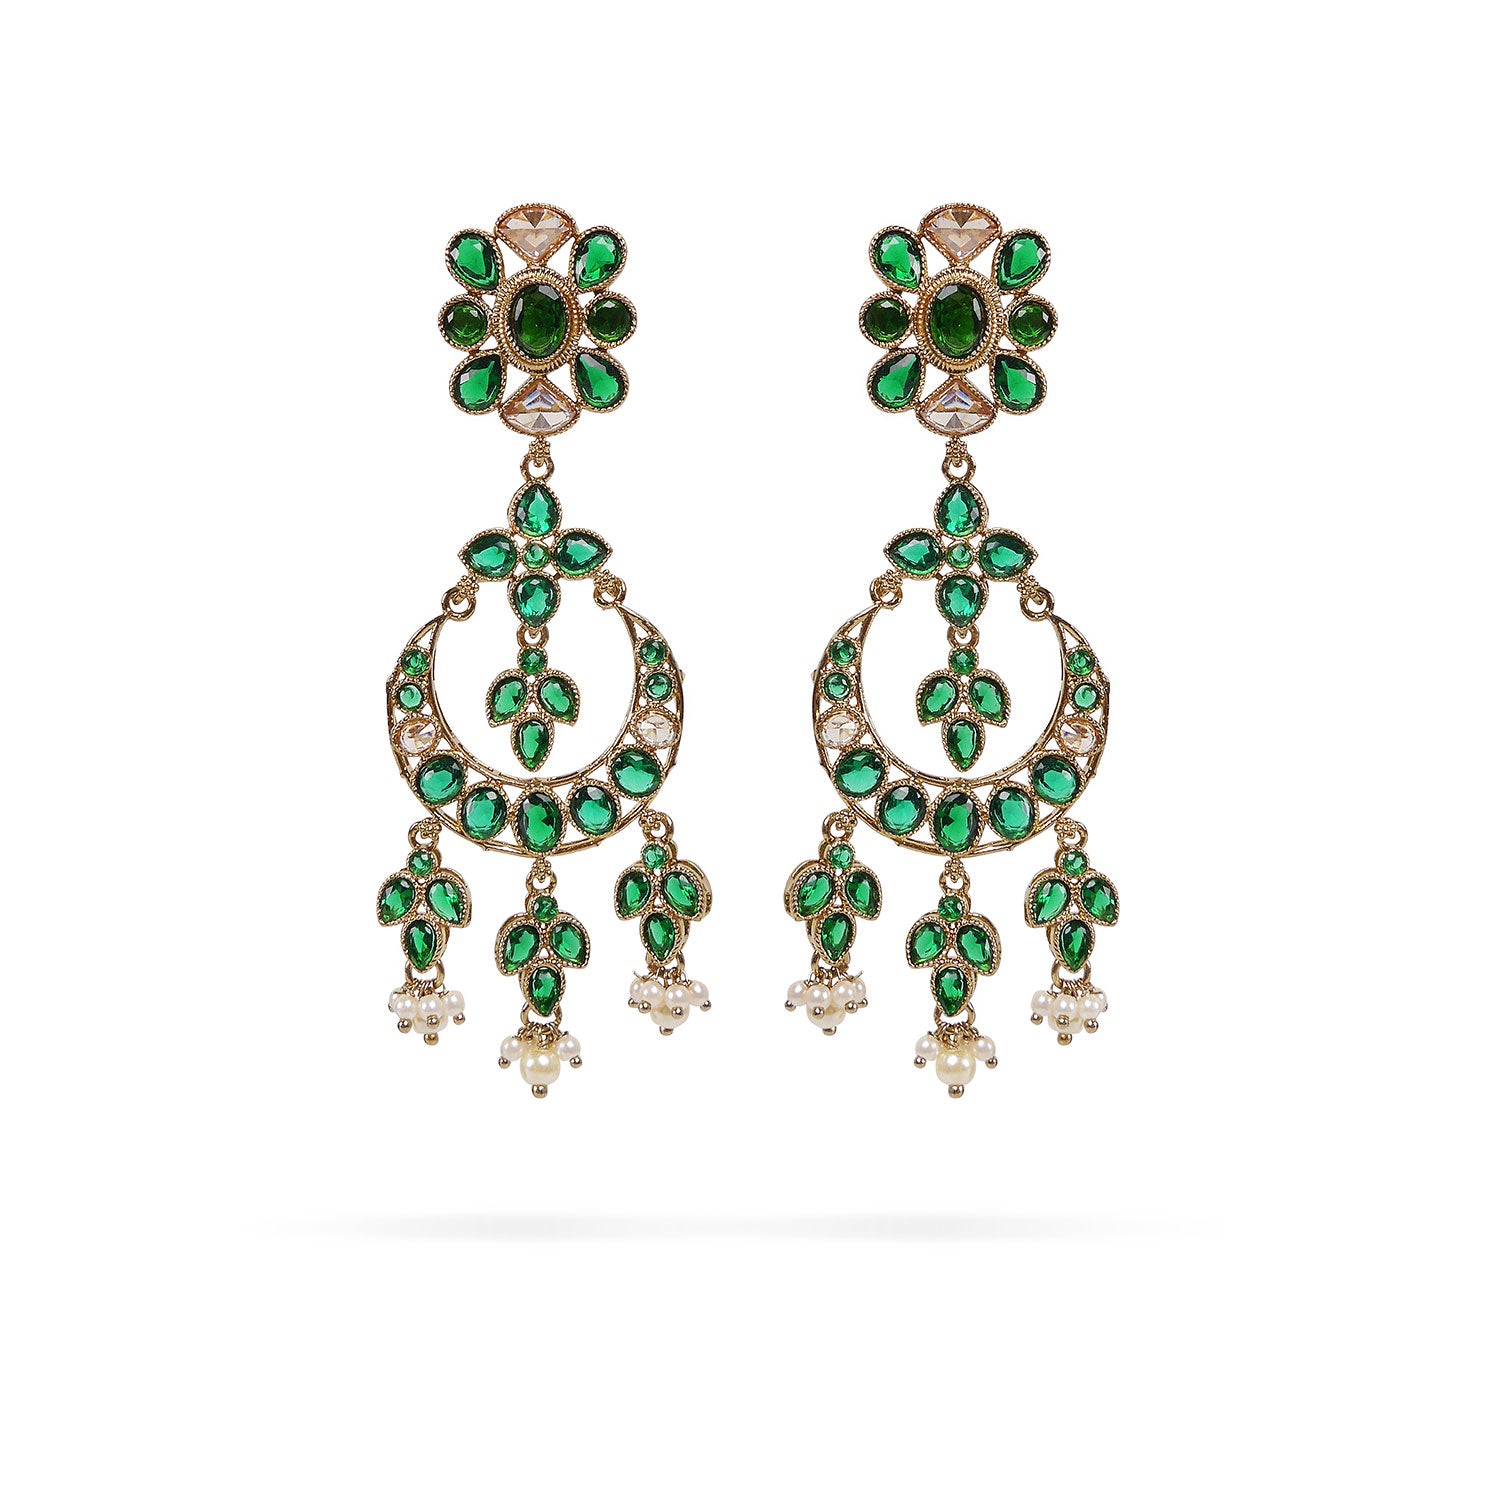 Mariana Long Crystal Earrings in Green